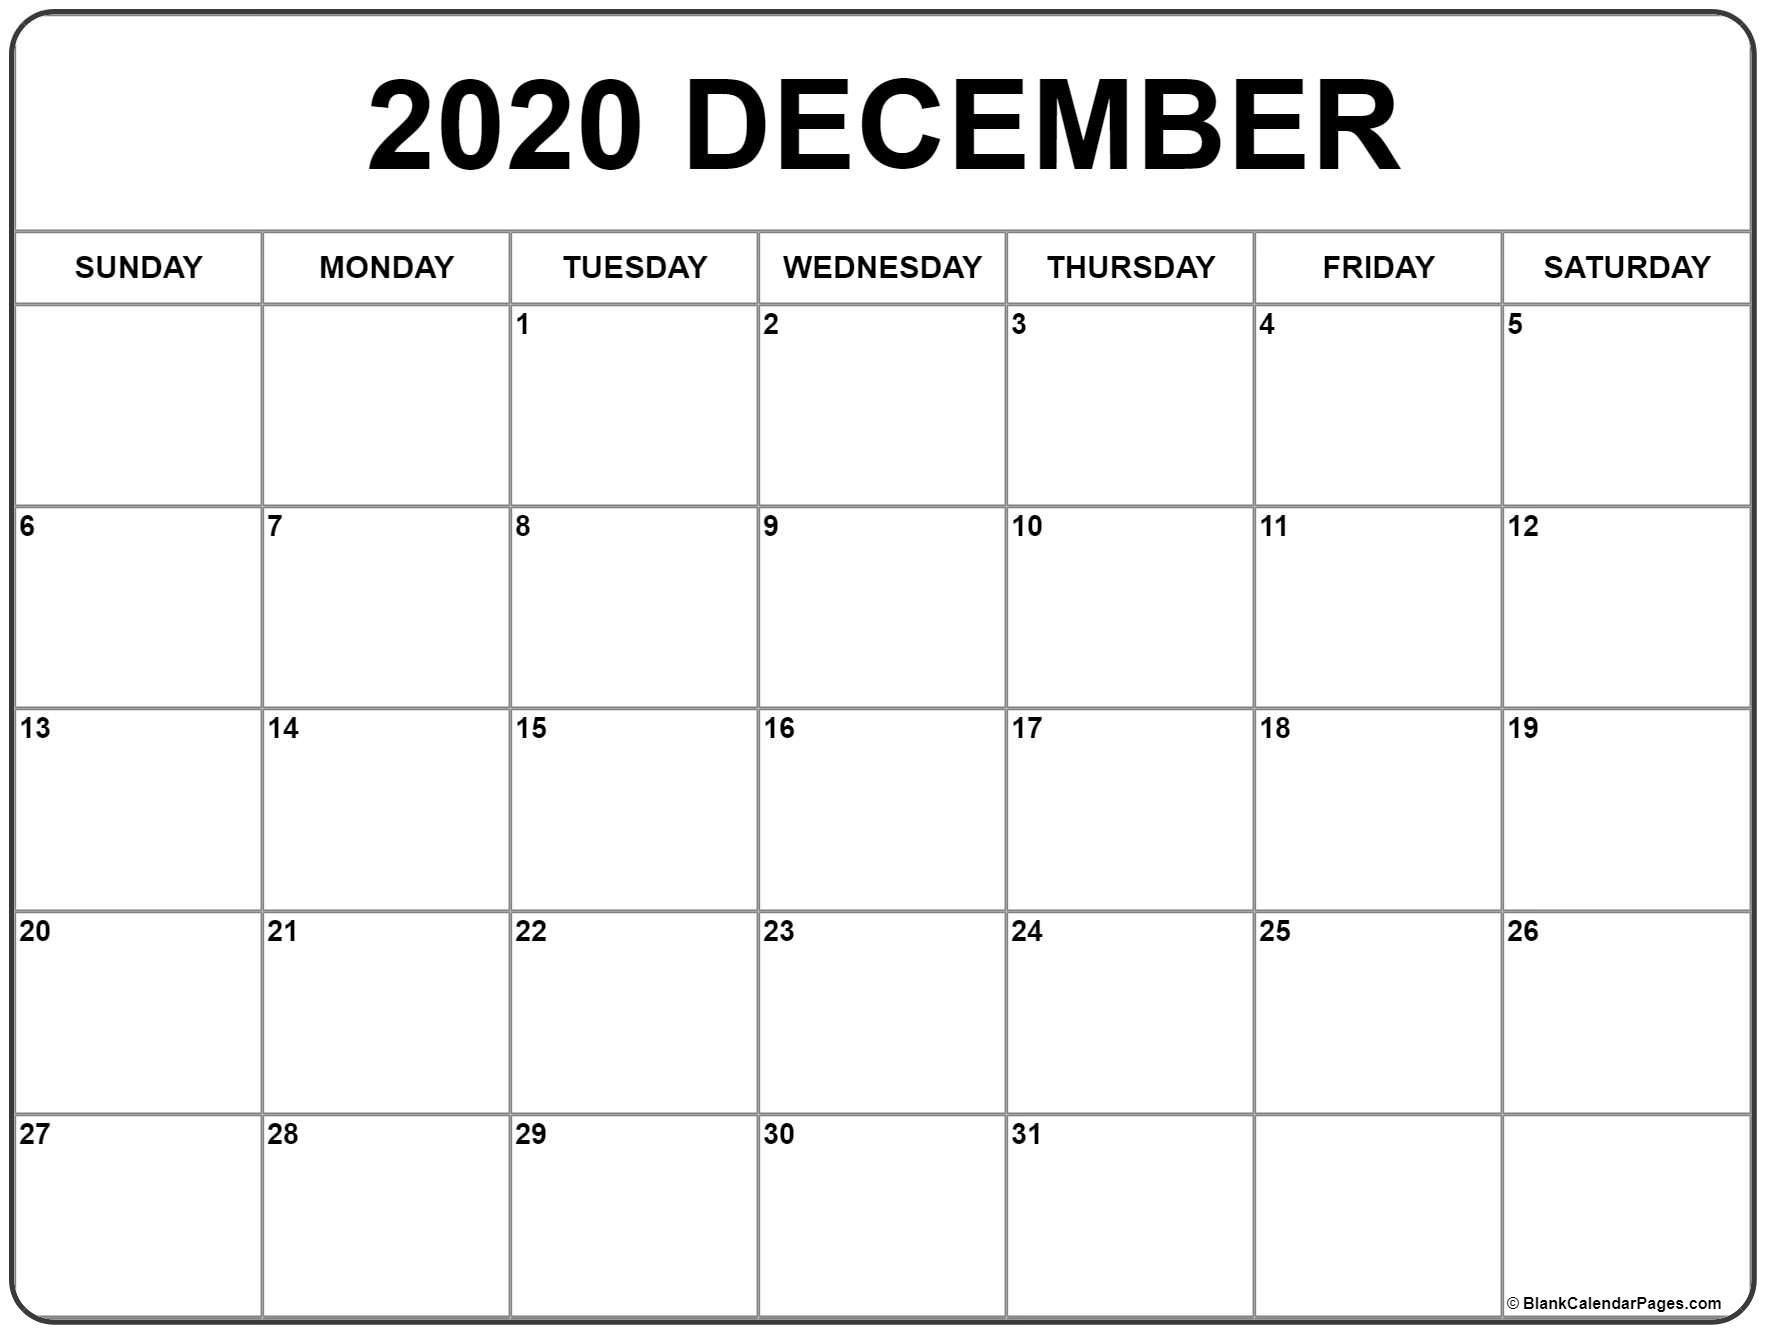 December 2020 Printable Calendar calendars